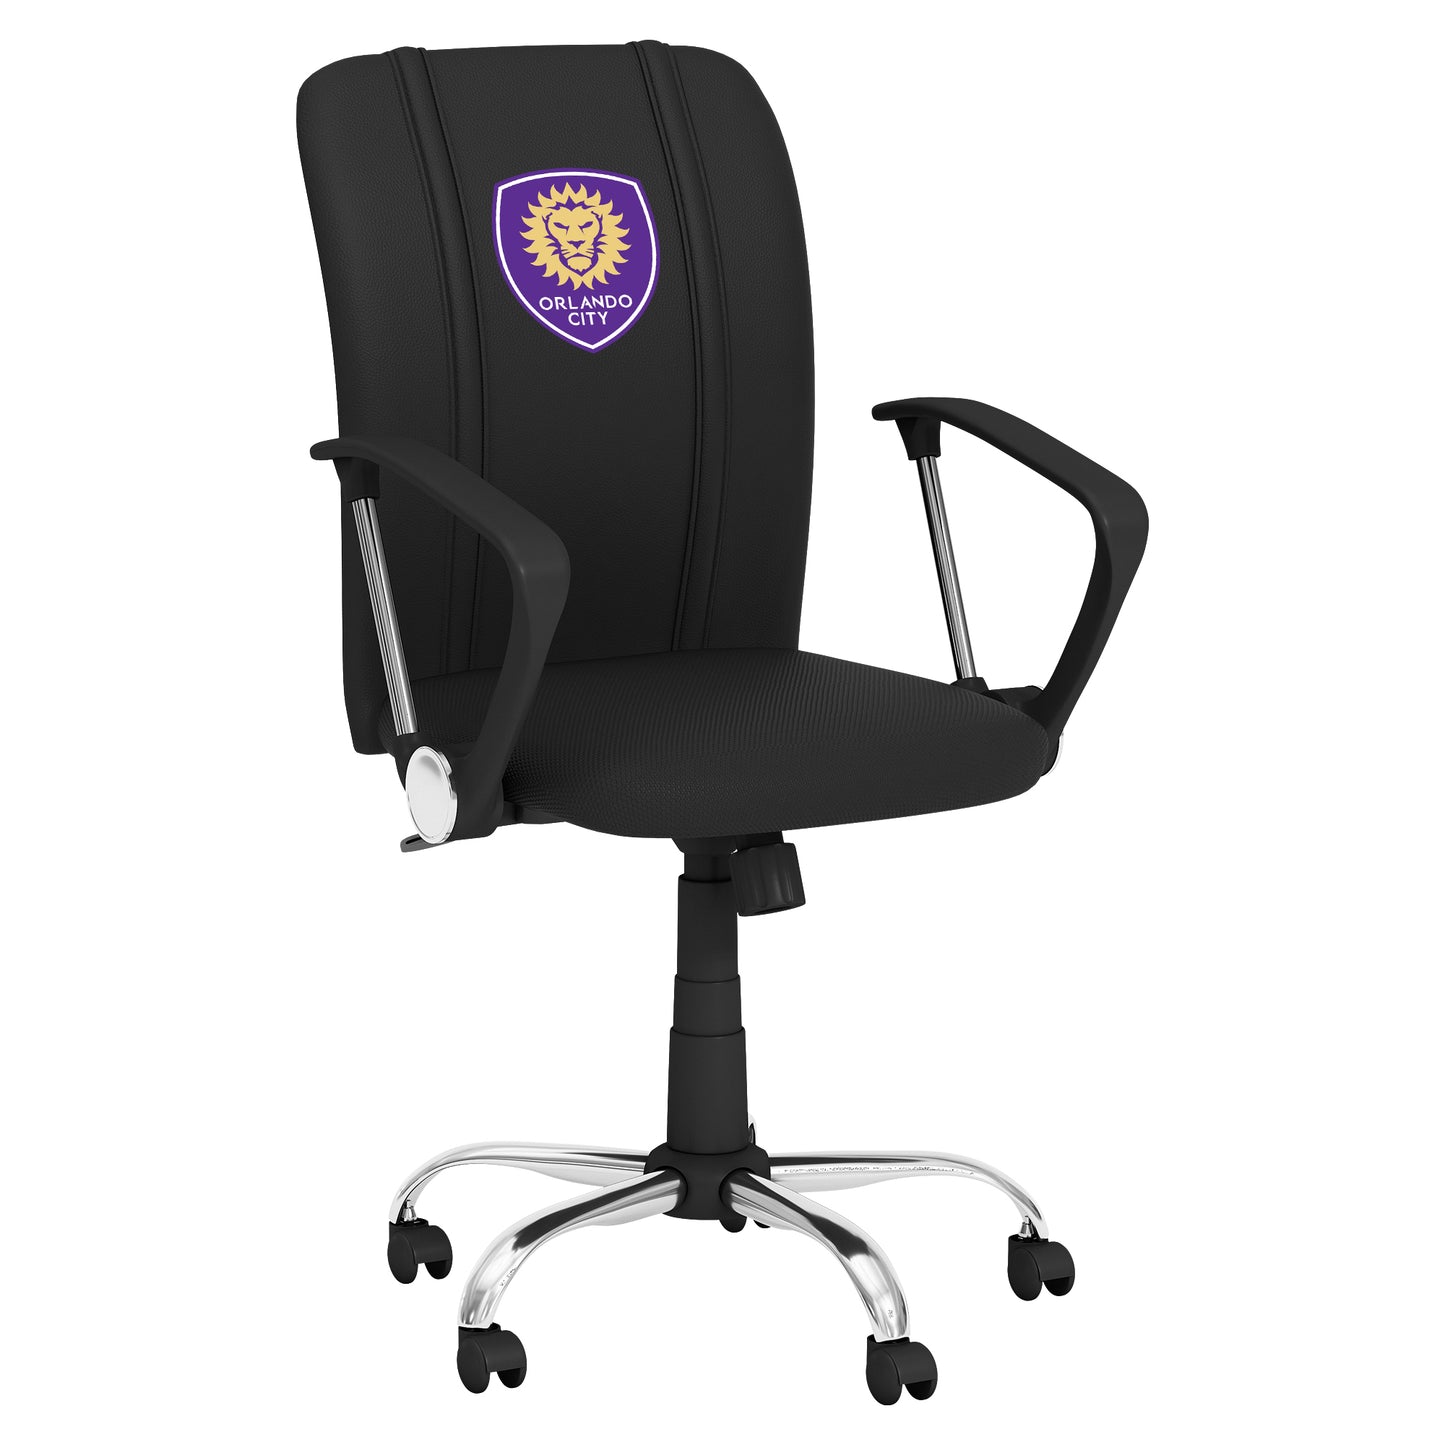 Curve Task Chair with Orlando City FC Logo